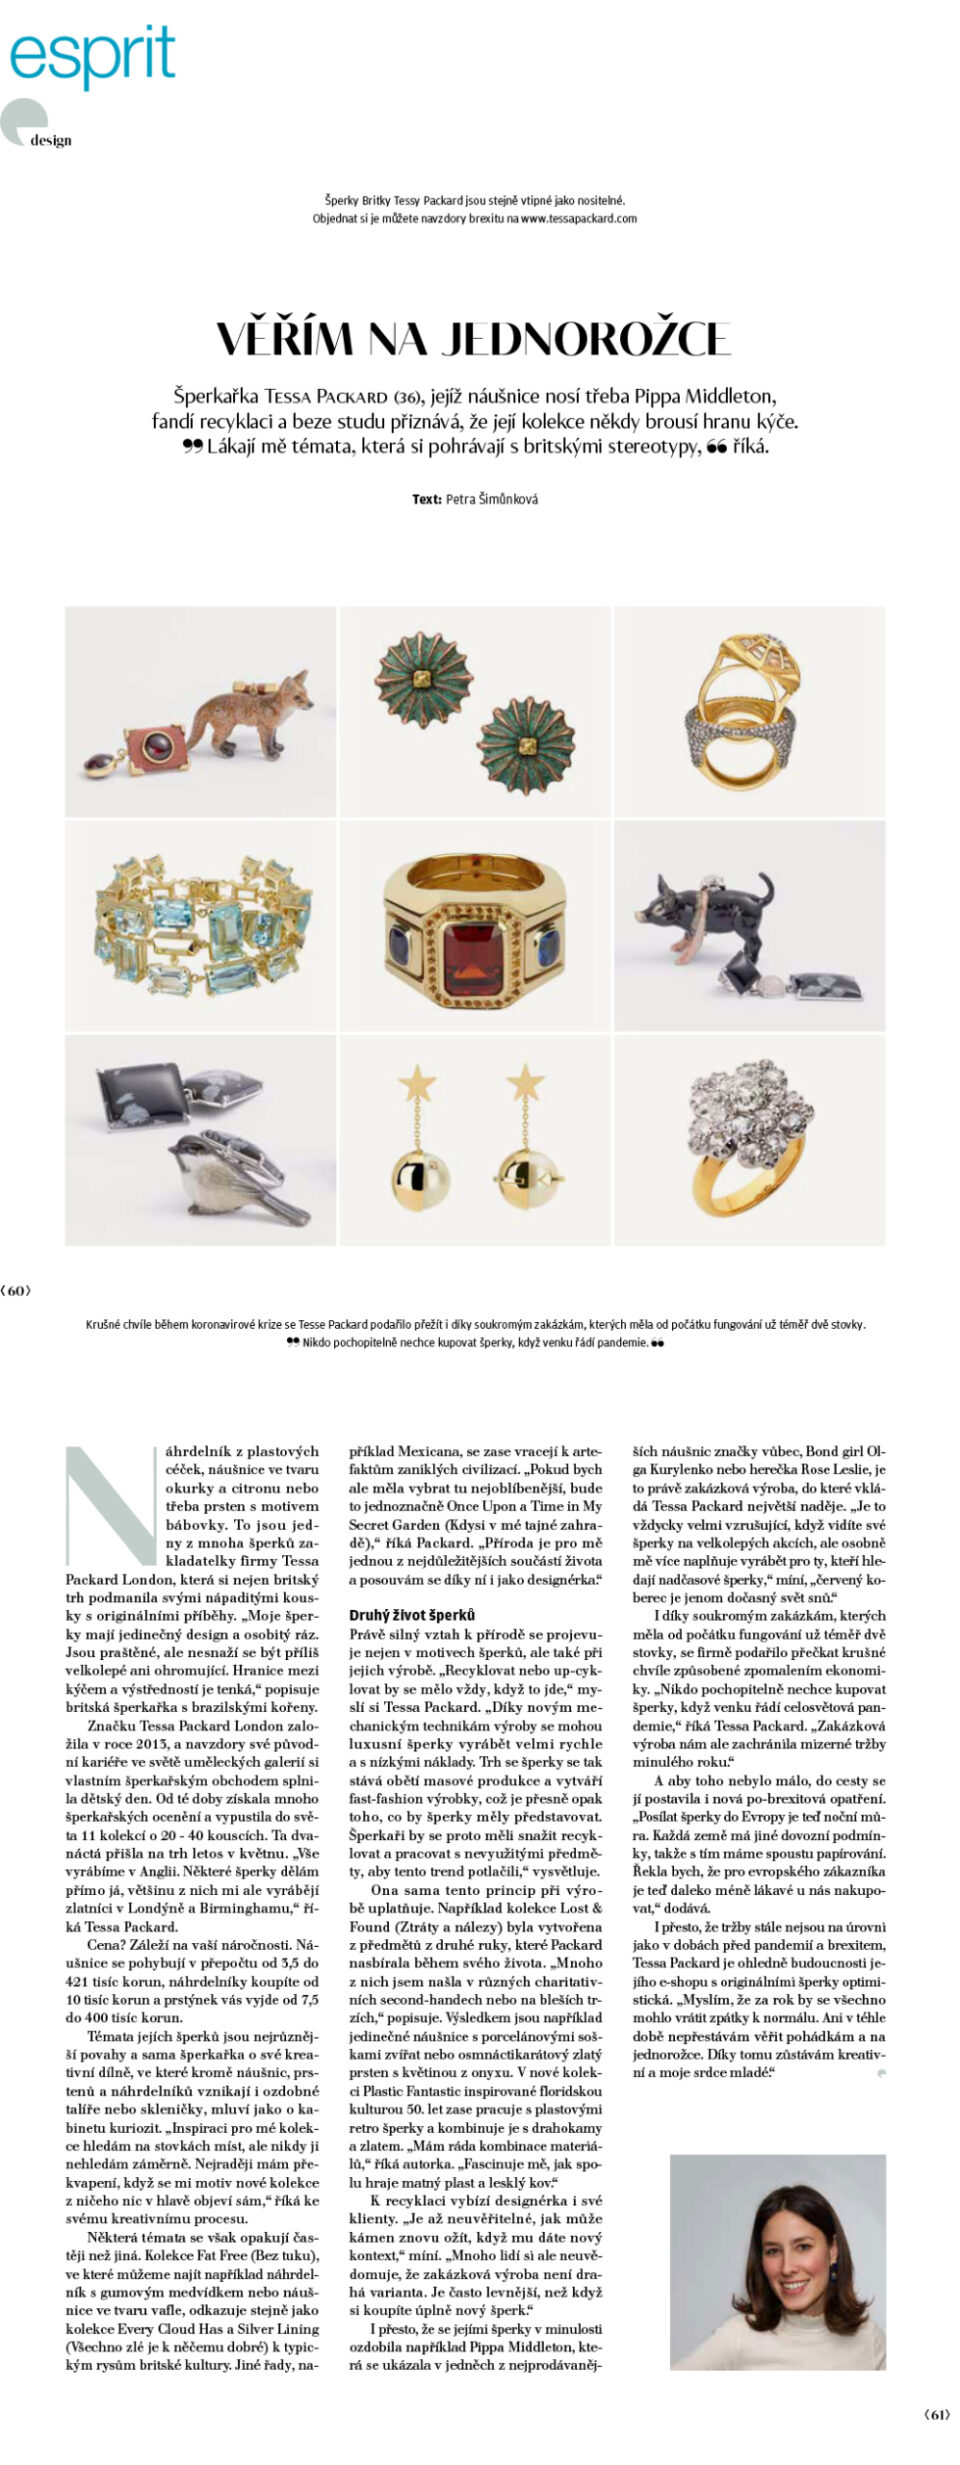 tessa packard esprit magazine fine jewellery interview bespoke jewellery design